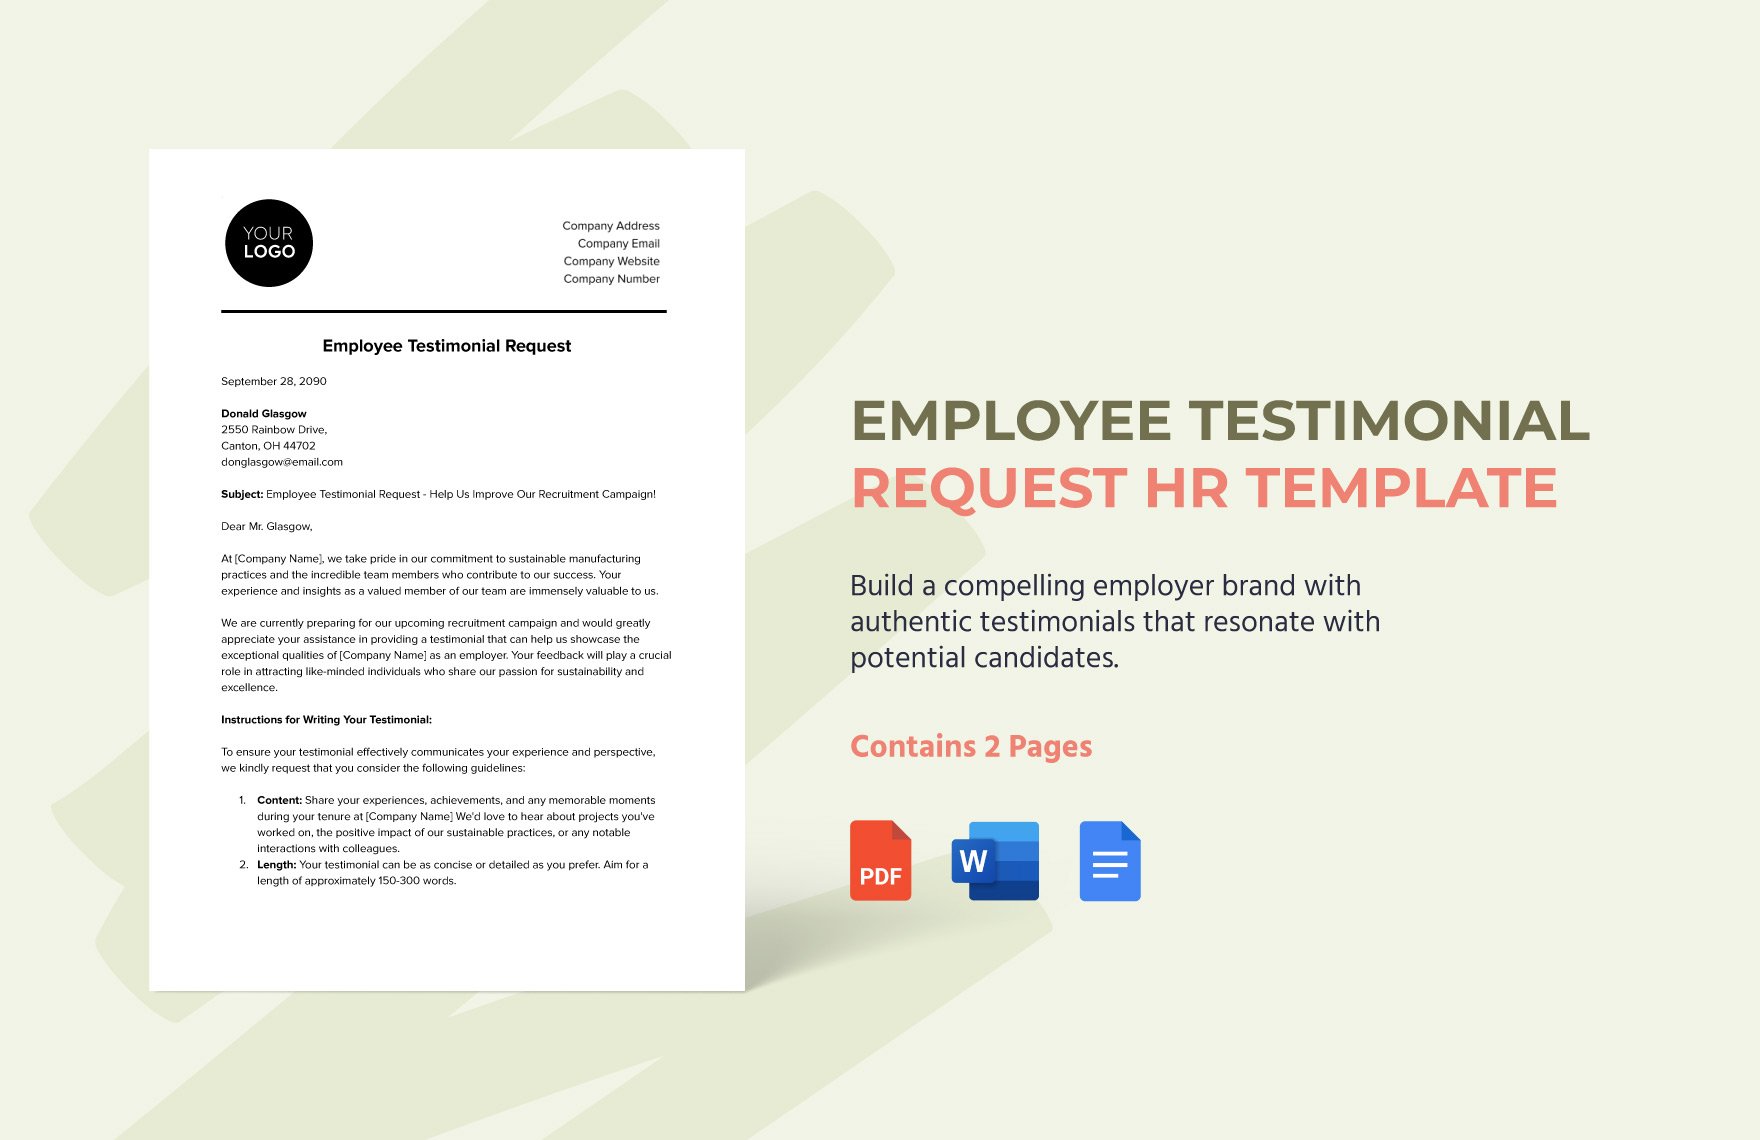 Employee Testimonial Request HR Template